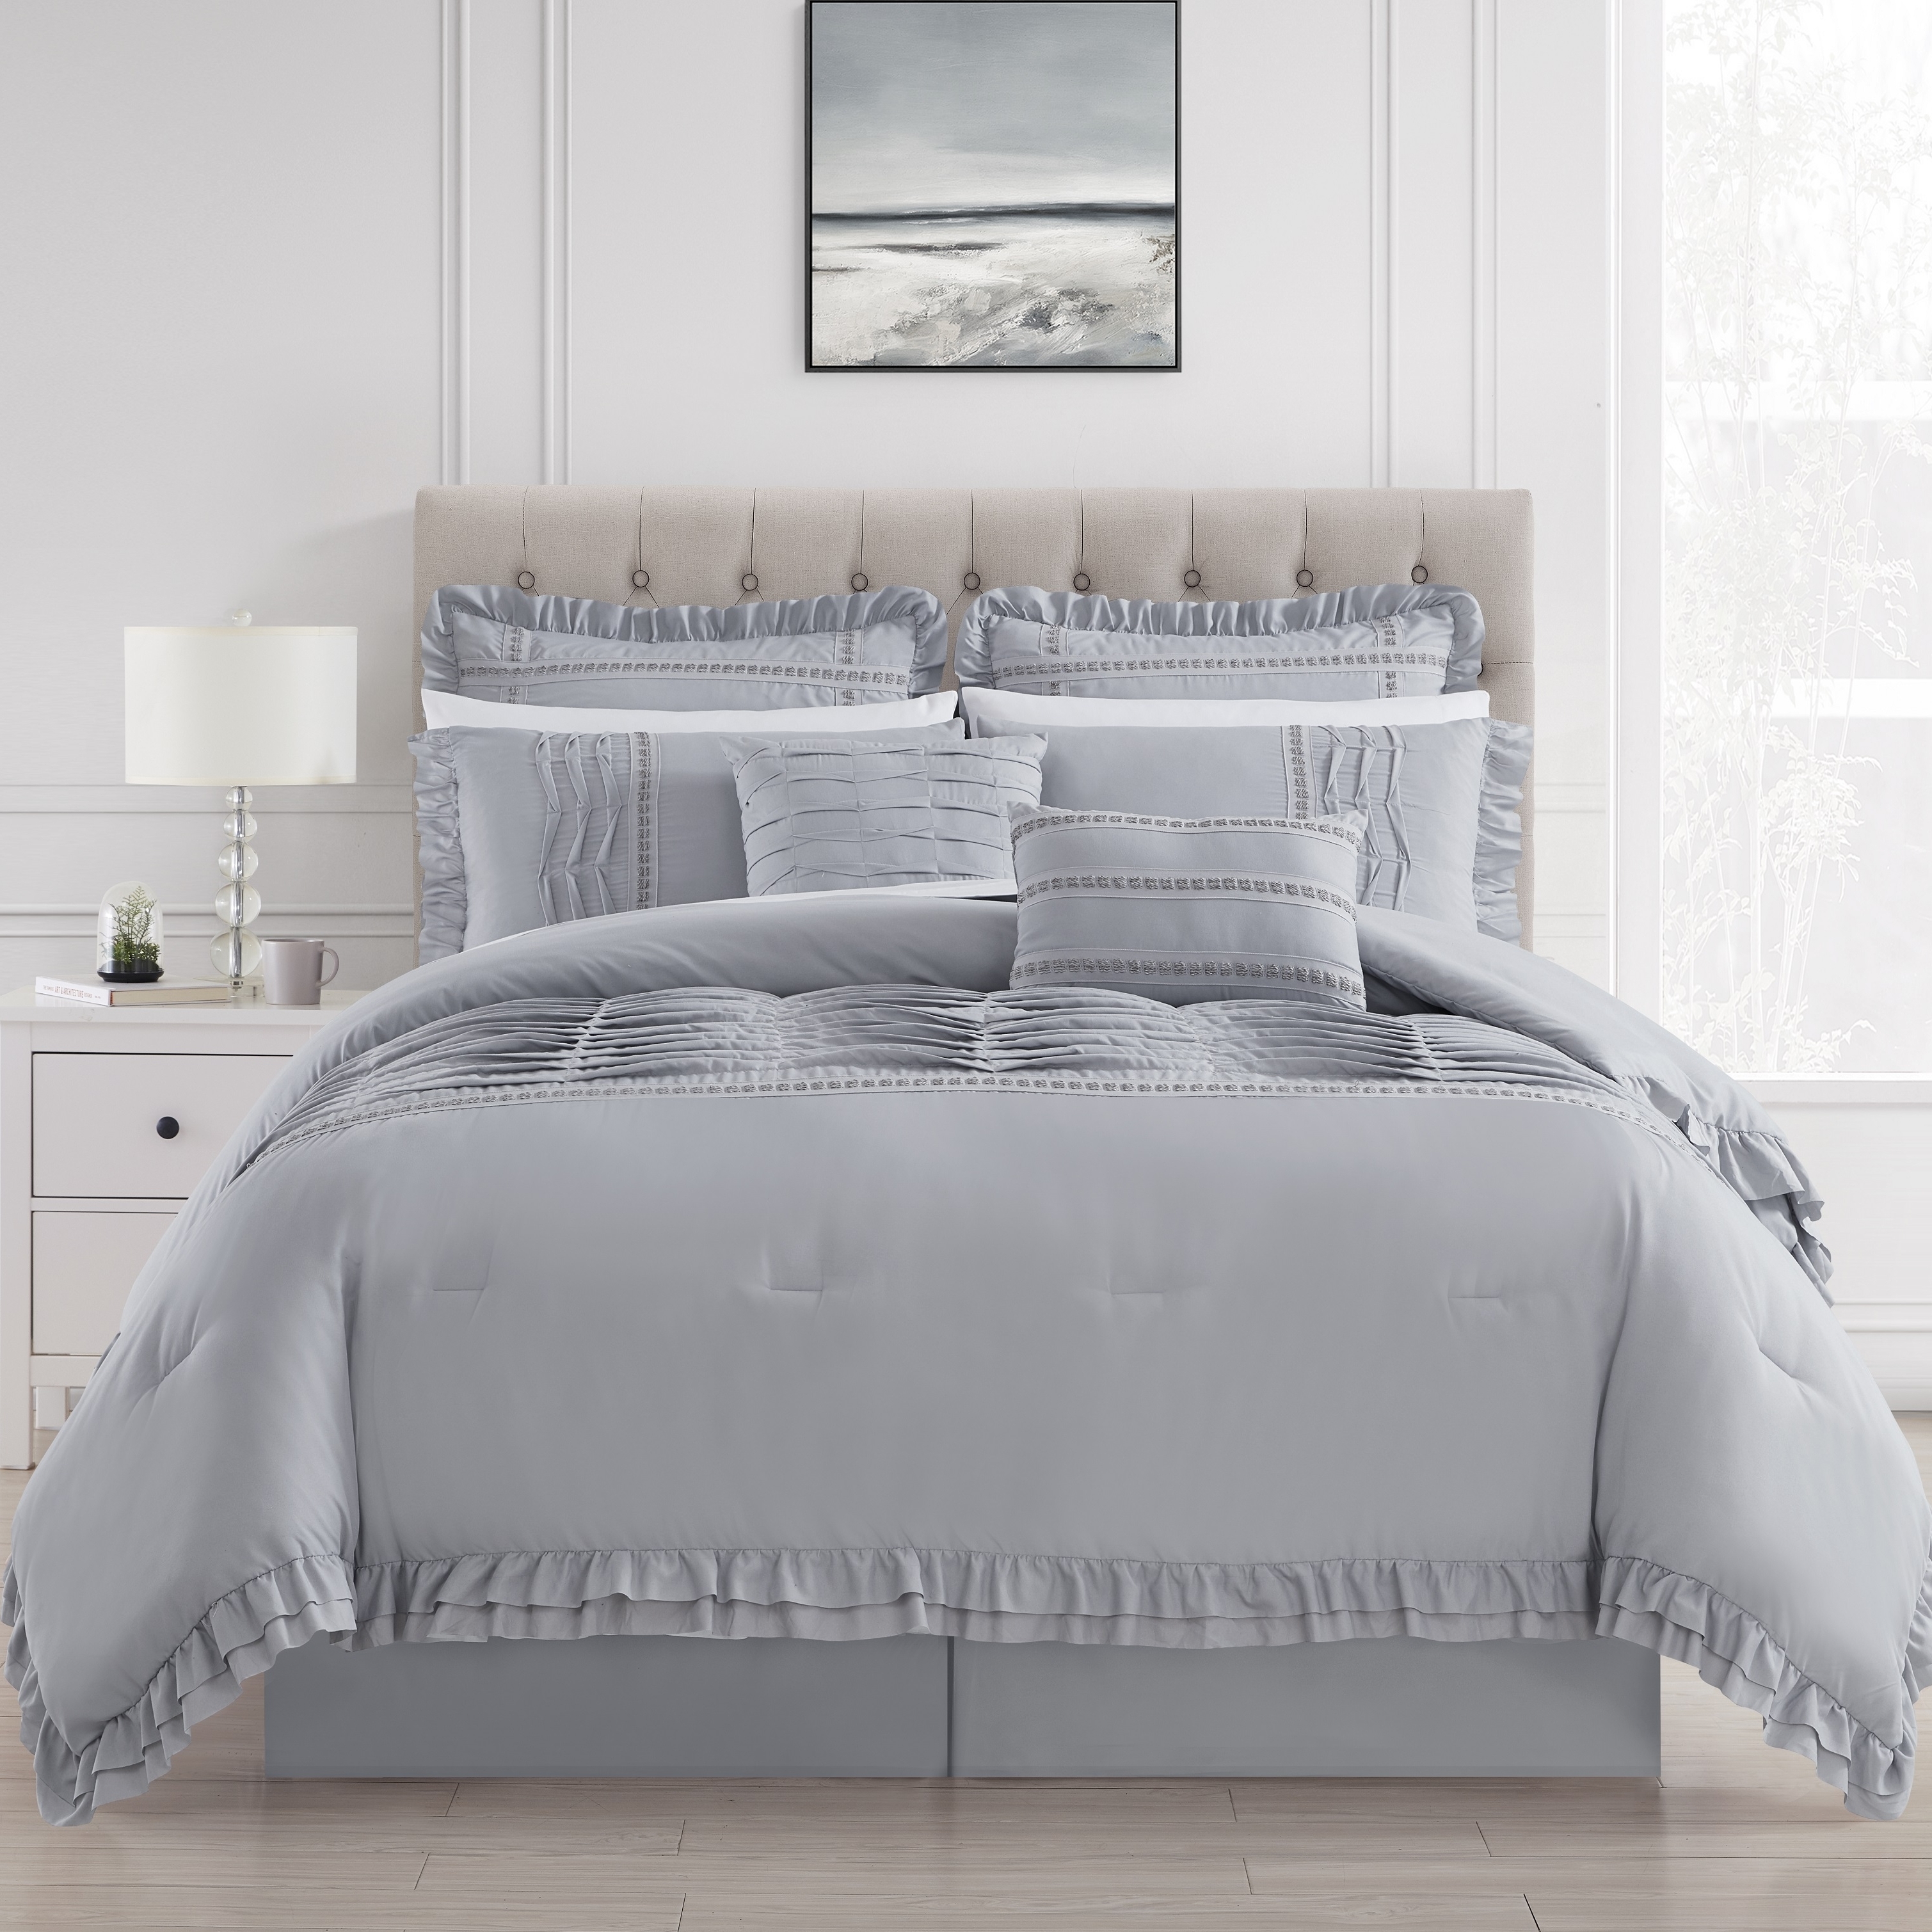 Yvonna 8 Piece Comforter Set Ruffled Pleated Flange Border Design Bedding - Grey, King